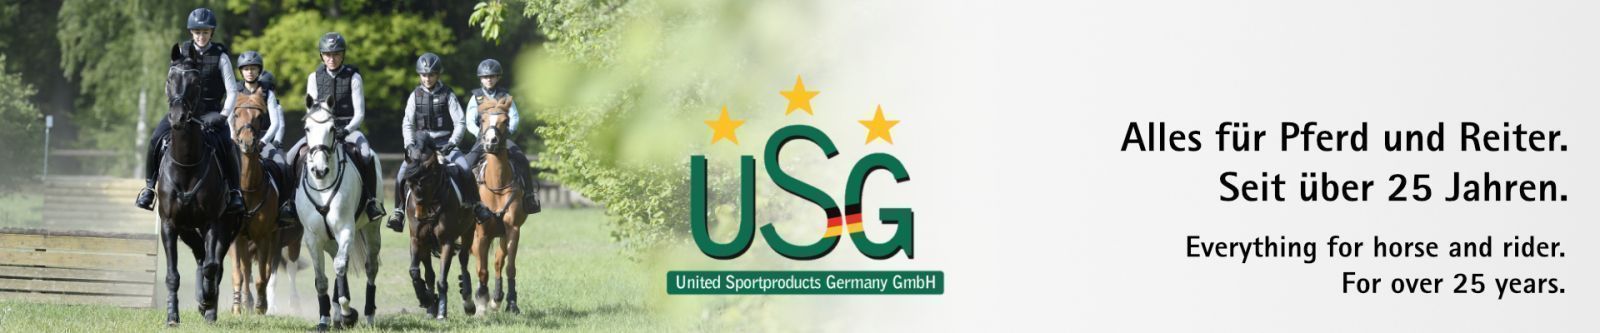 USG-Fachhändler - USG - United Sportproducts Germany GmbH